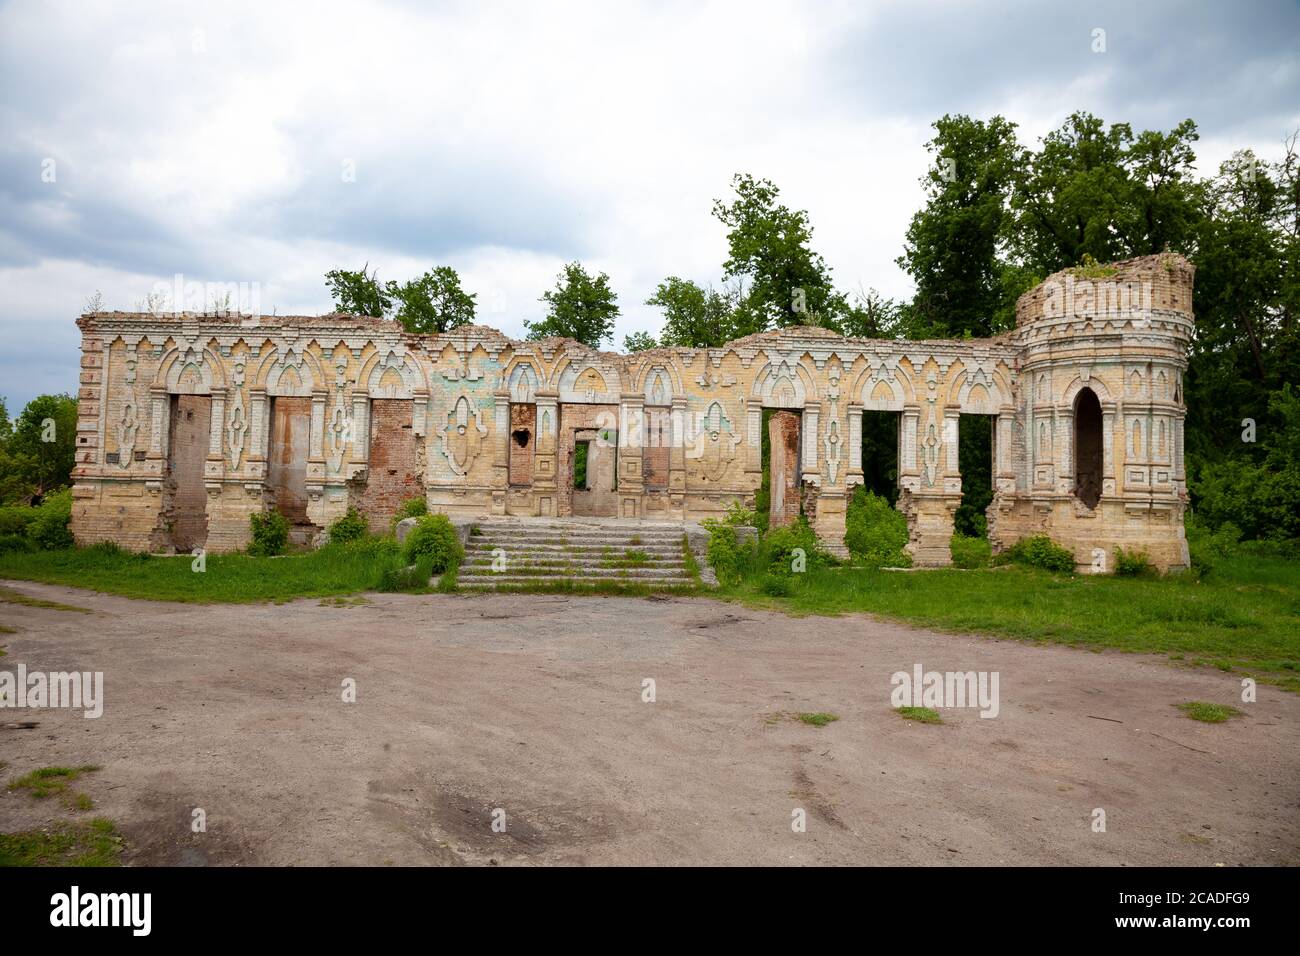 The ruins of the Palace von der Osten Saken on the border of the town of Nemeshaevo and the village of Mirotskoye, Kiev region, Ukraine. Abandoned old Stock Photo